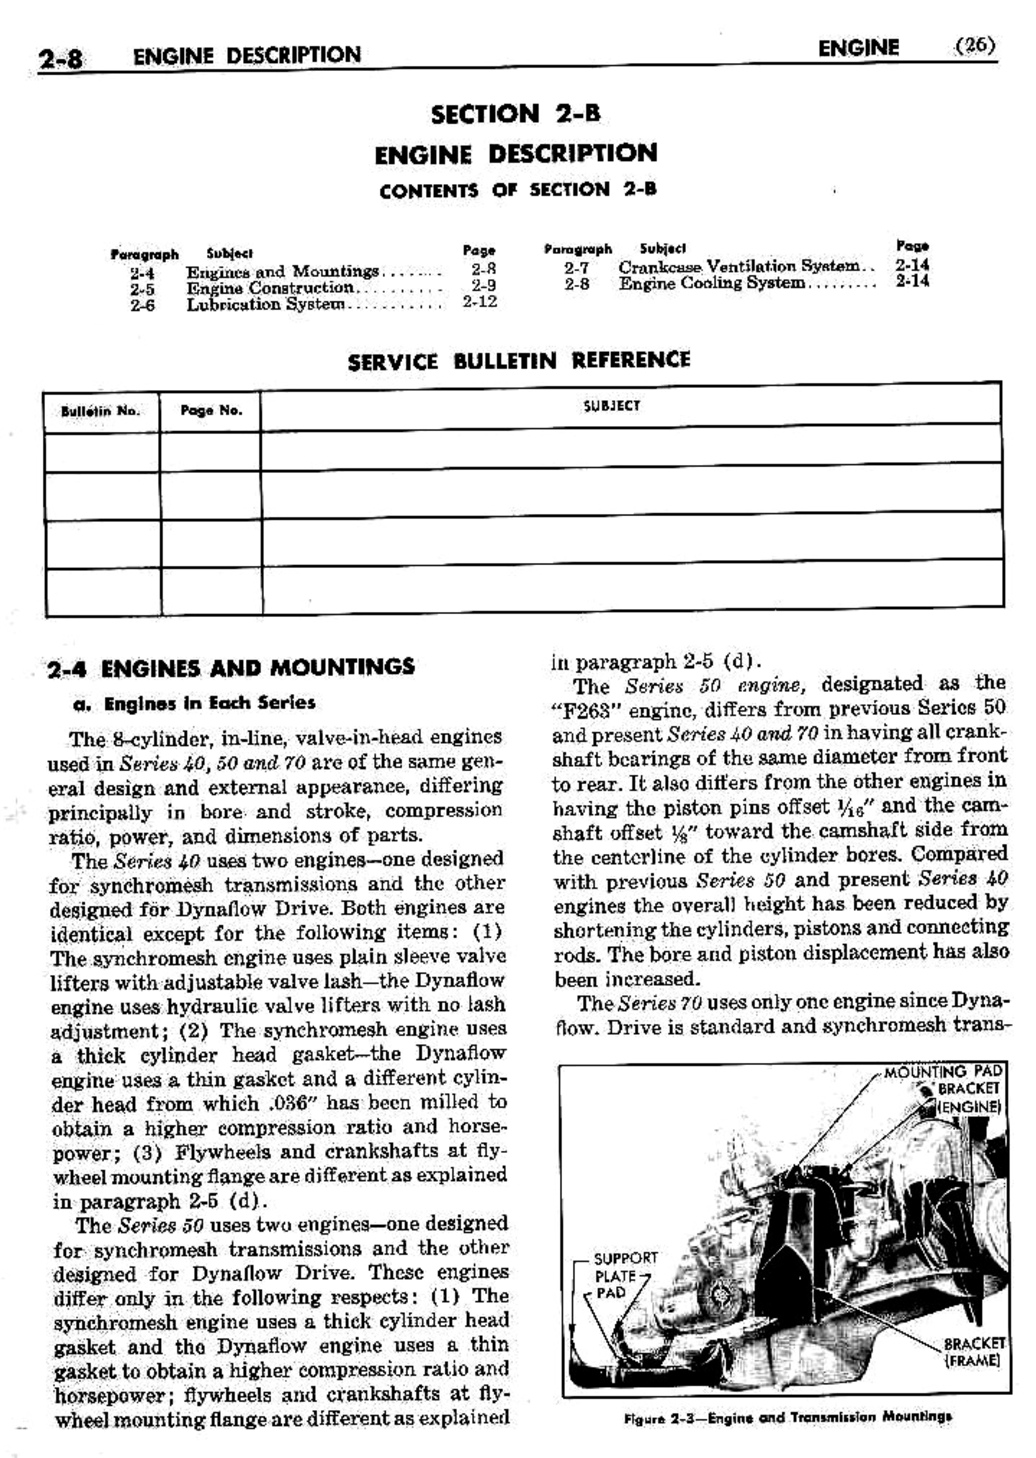 n_03 1950 Buick Shop Manual - Engine-008-008.jpg